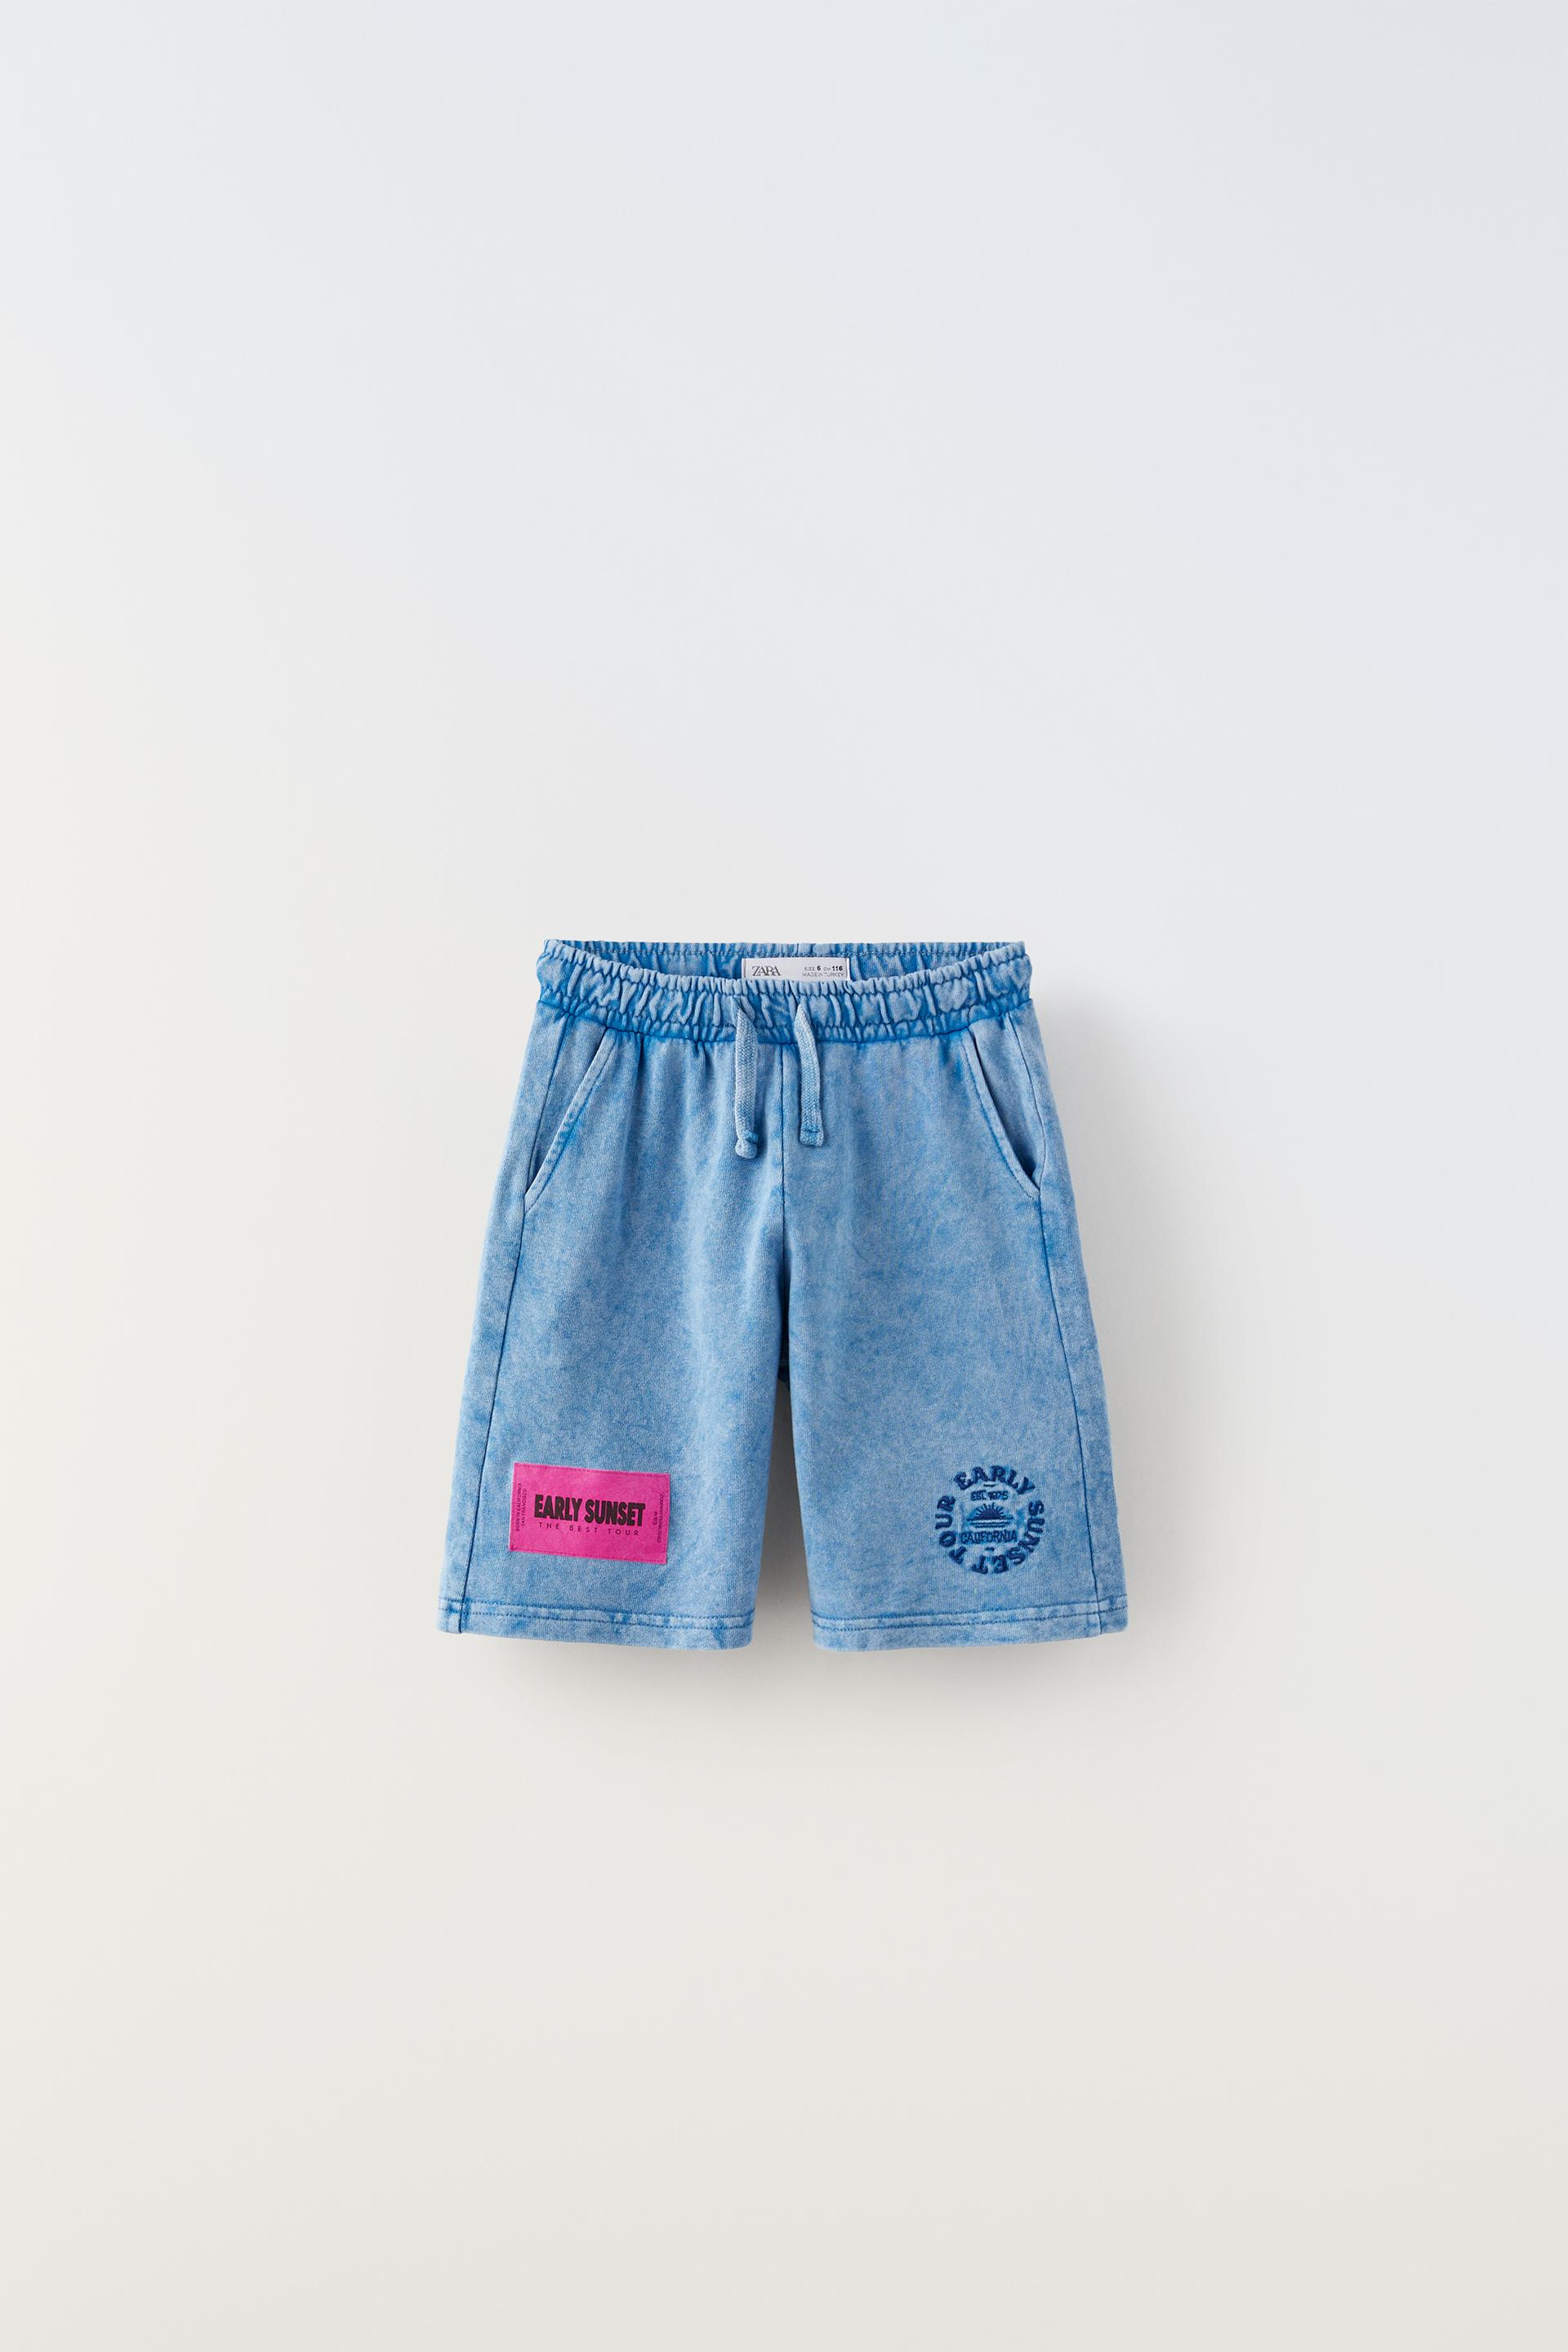 Sunzel shorts Accideny bought a size medium 😒 - Depop